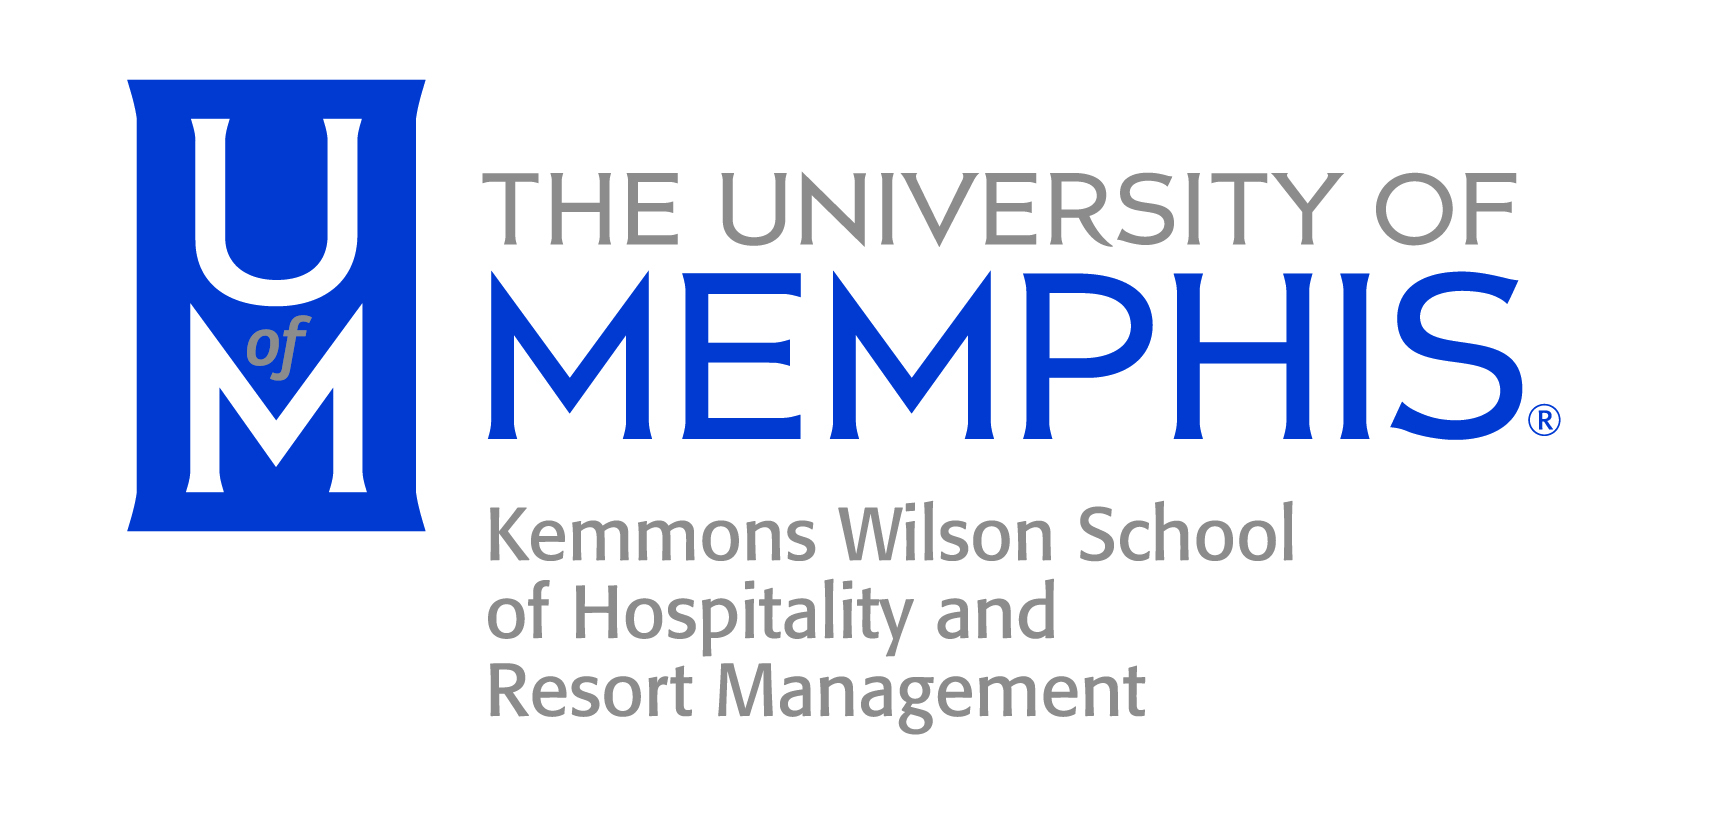 The University of Memphis | Kemmons Wilson School of Hospitality and Resort Management